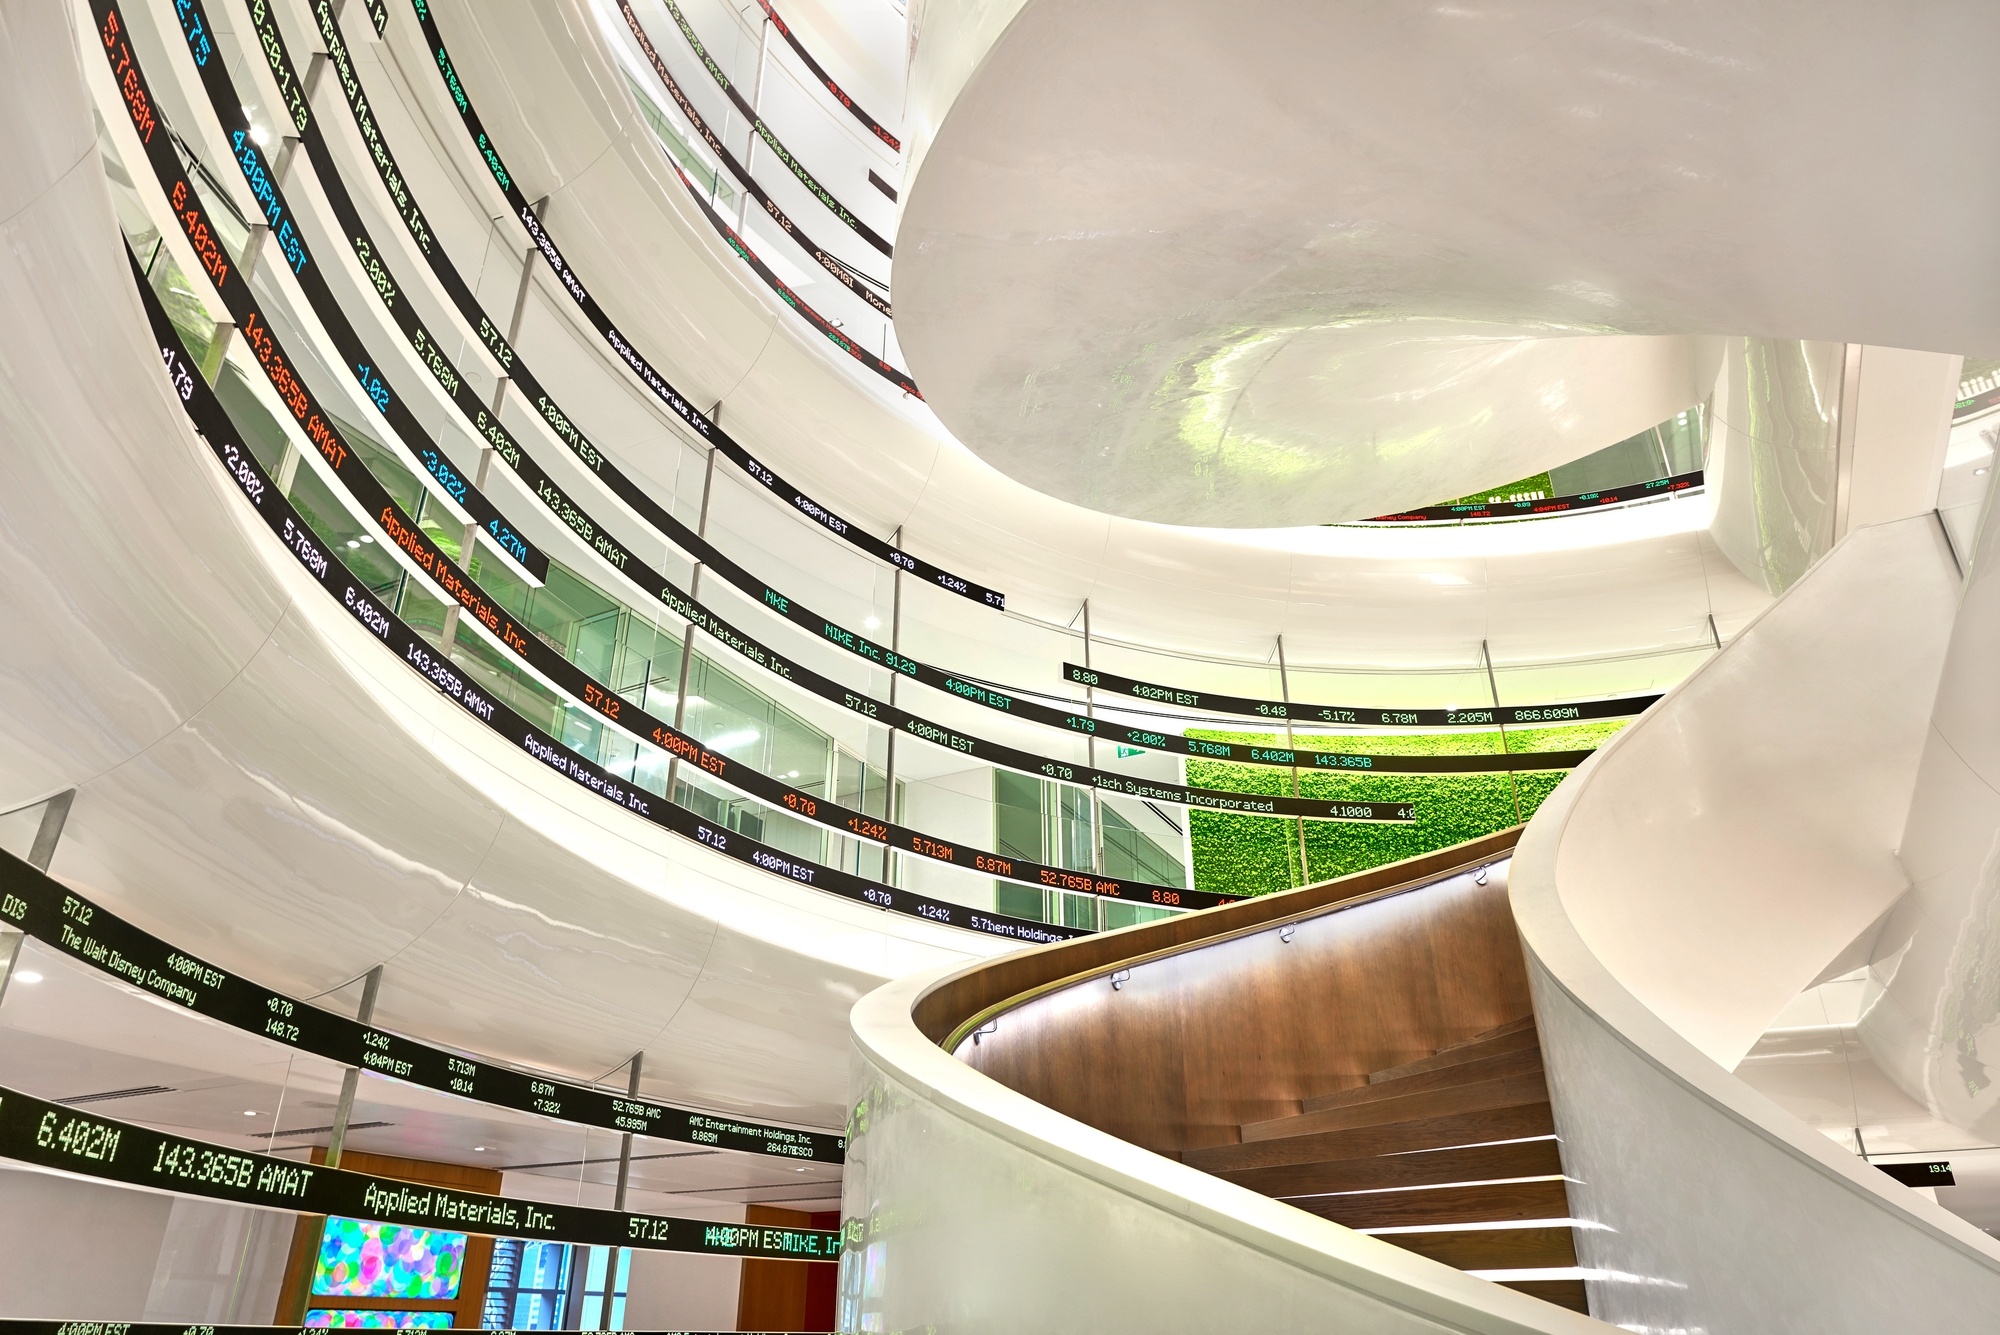 Asharq新闻办公室-迪拜|ART-Arrakis | 建筑室内设计的创新与灵感